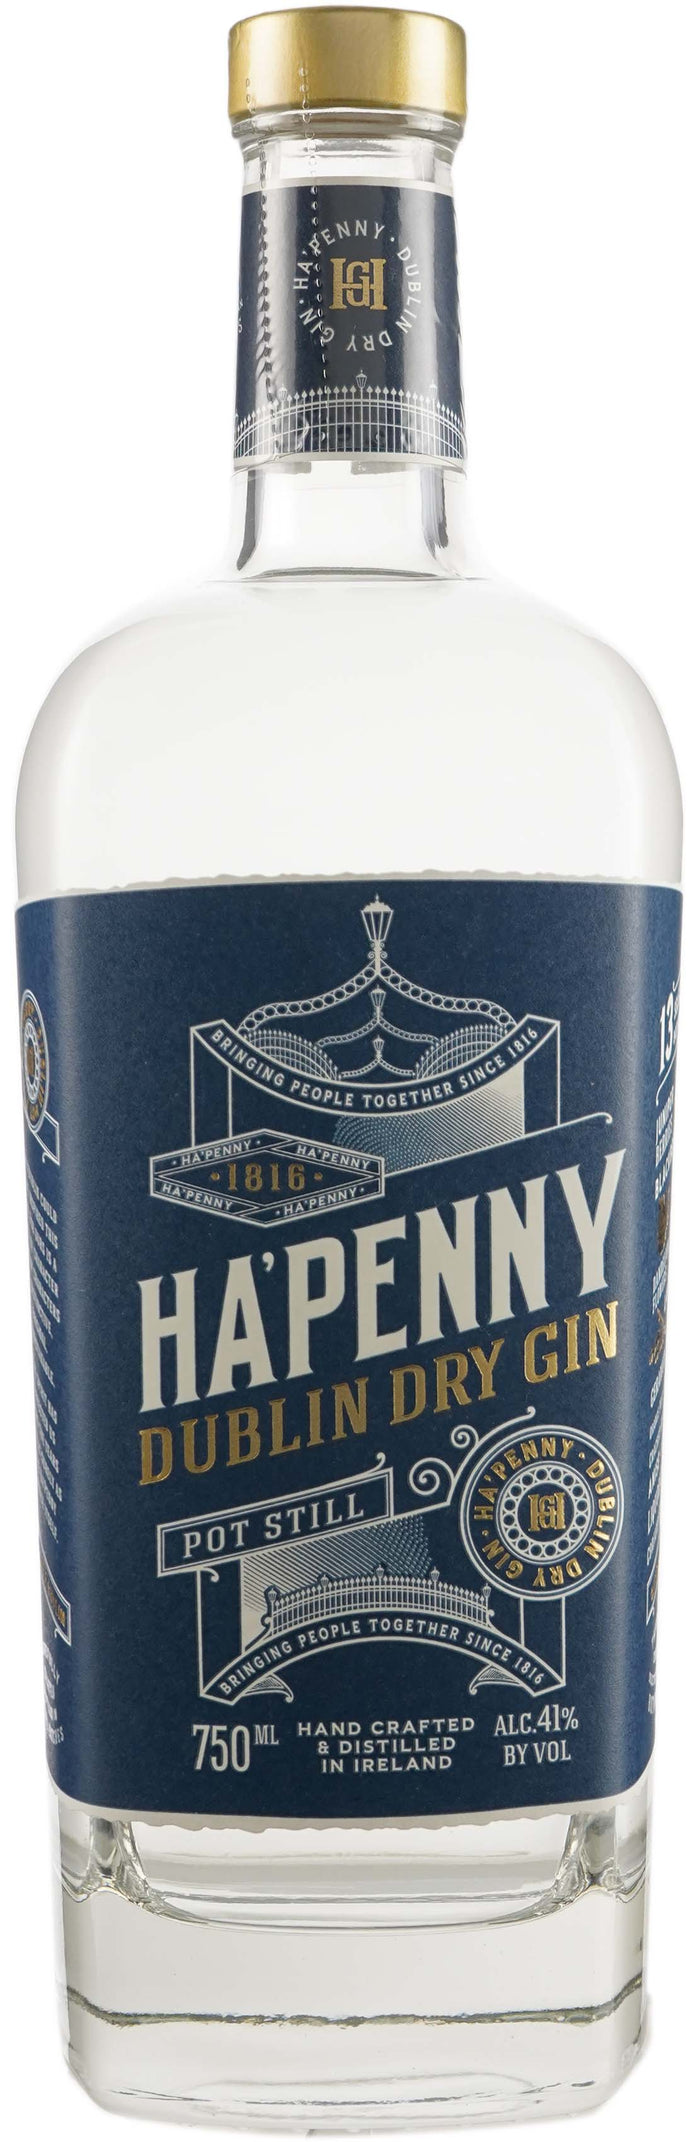 Ha' Penny Dublin Dry Gin